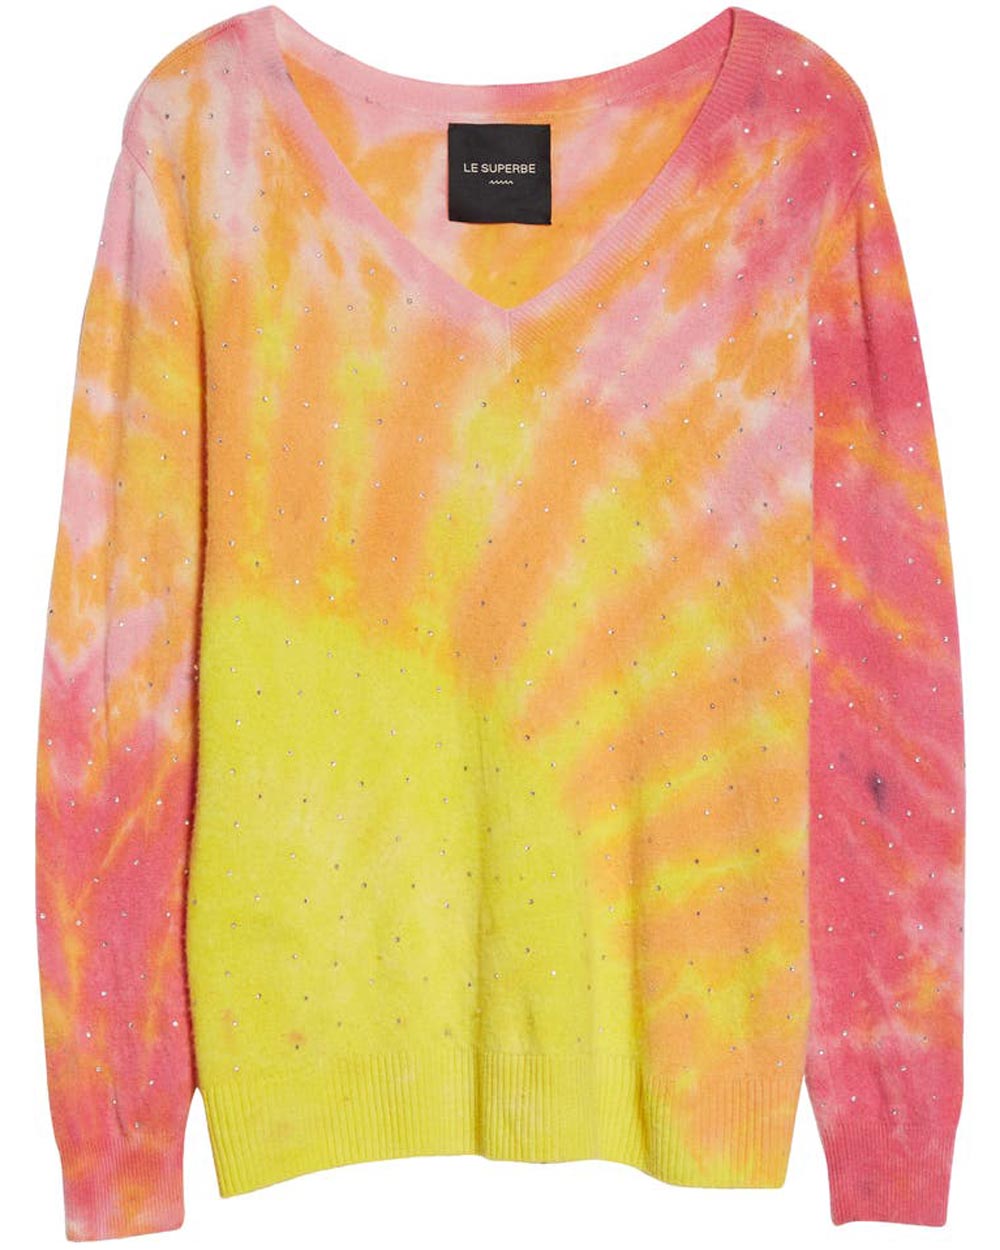 Summer Tie Dye Rhinestone Ray Of Light Sweater